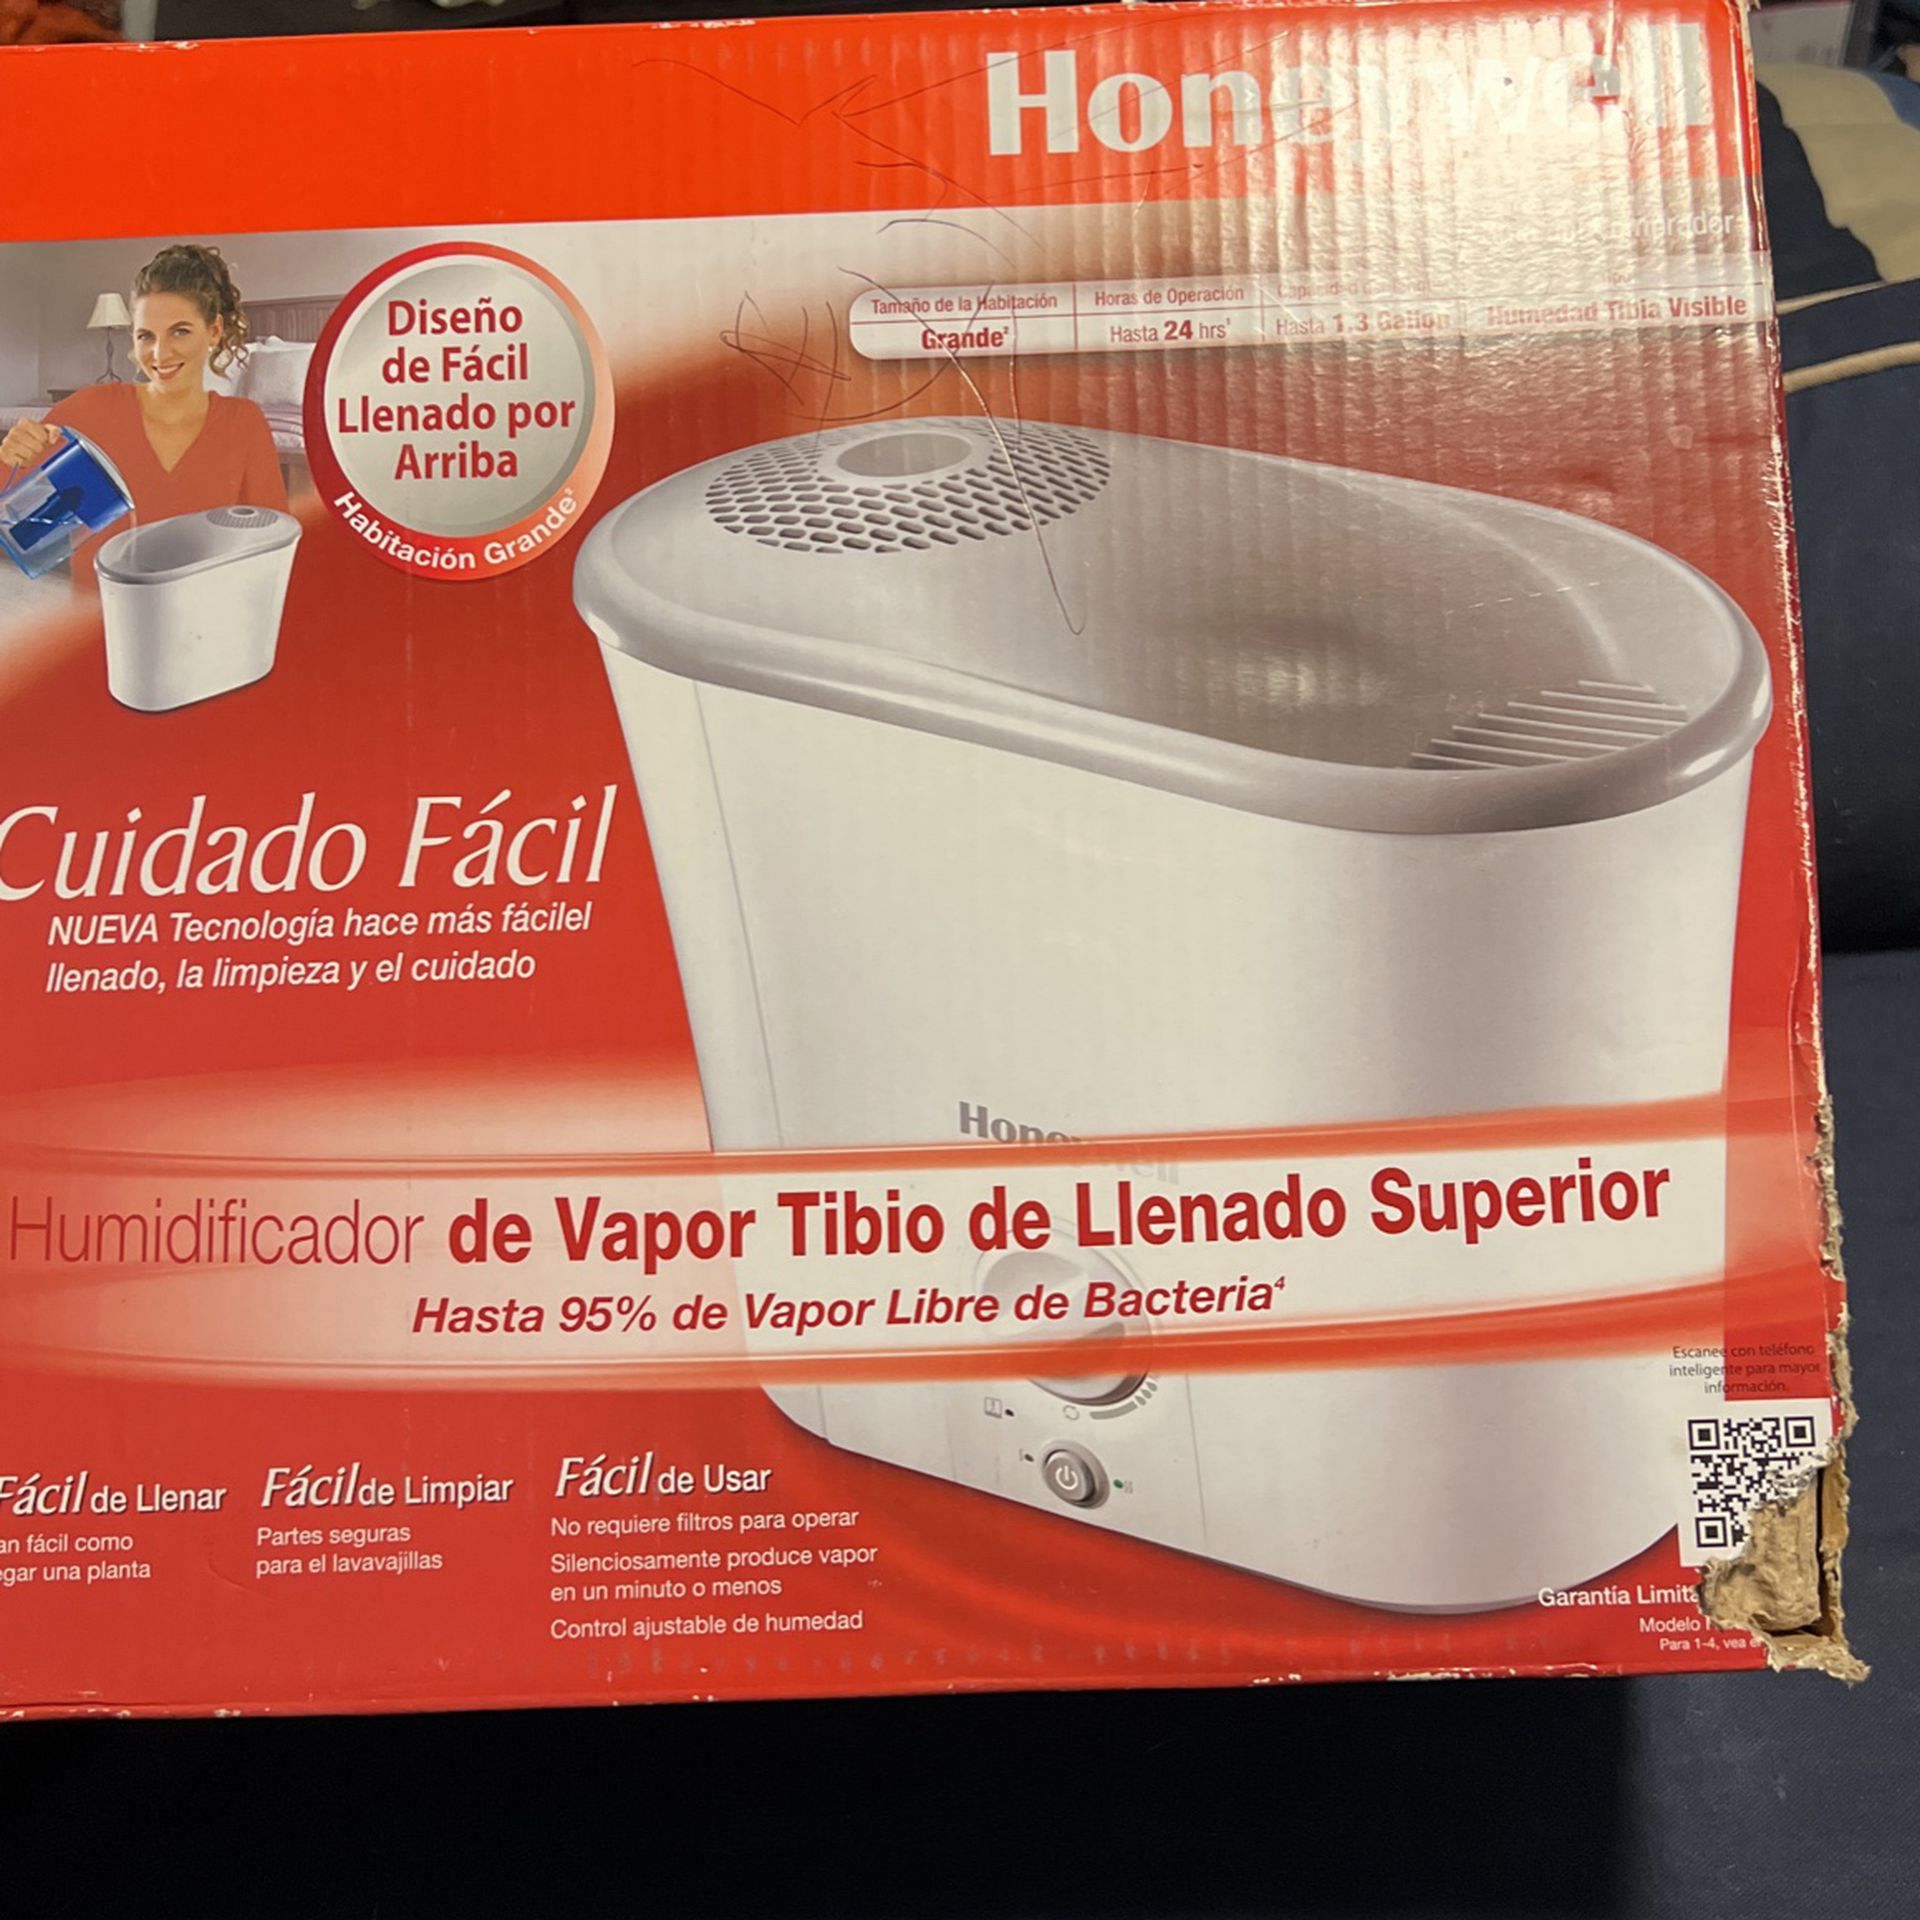 Honeywell Humidifier Warm Mist 